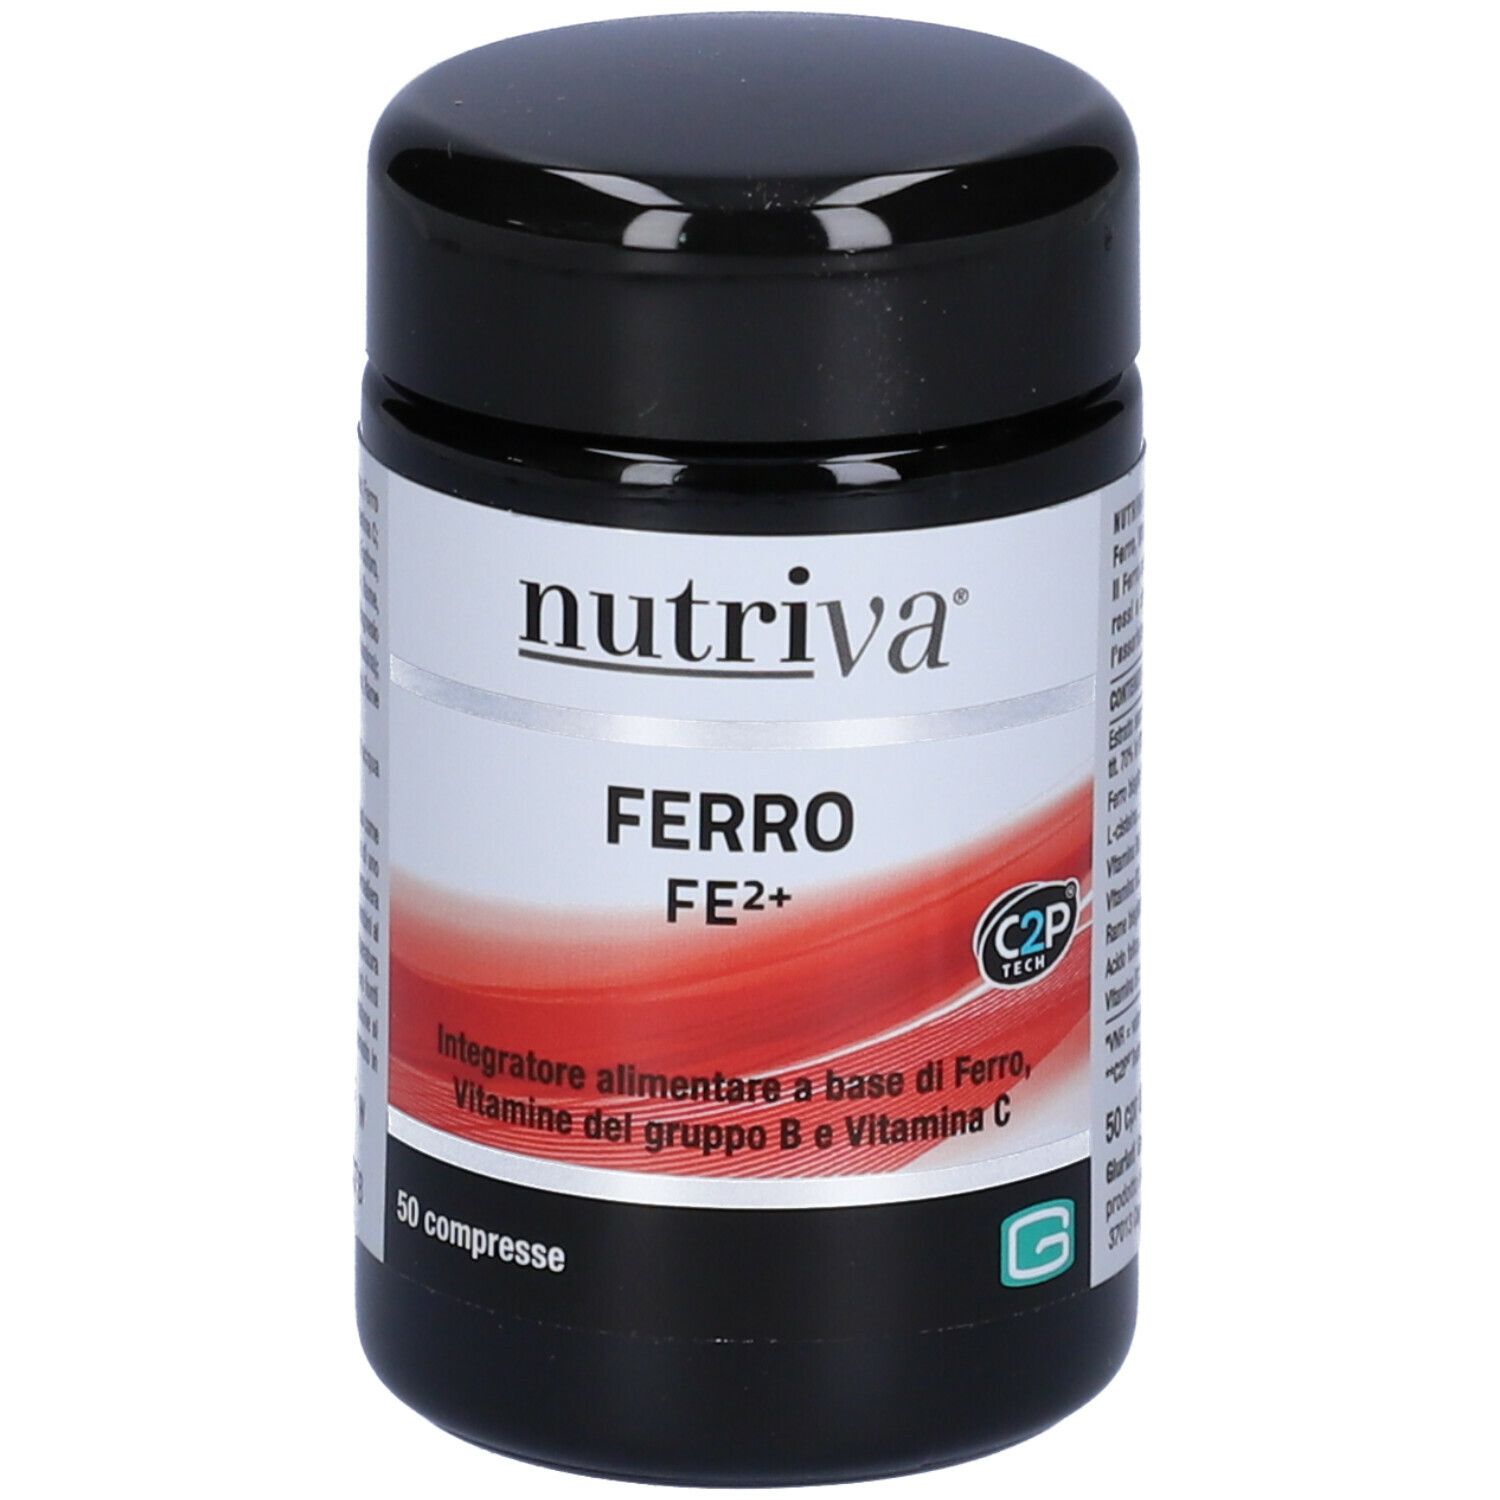 Image of Nutriva® FERRO FE2+